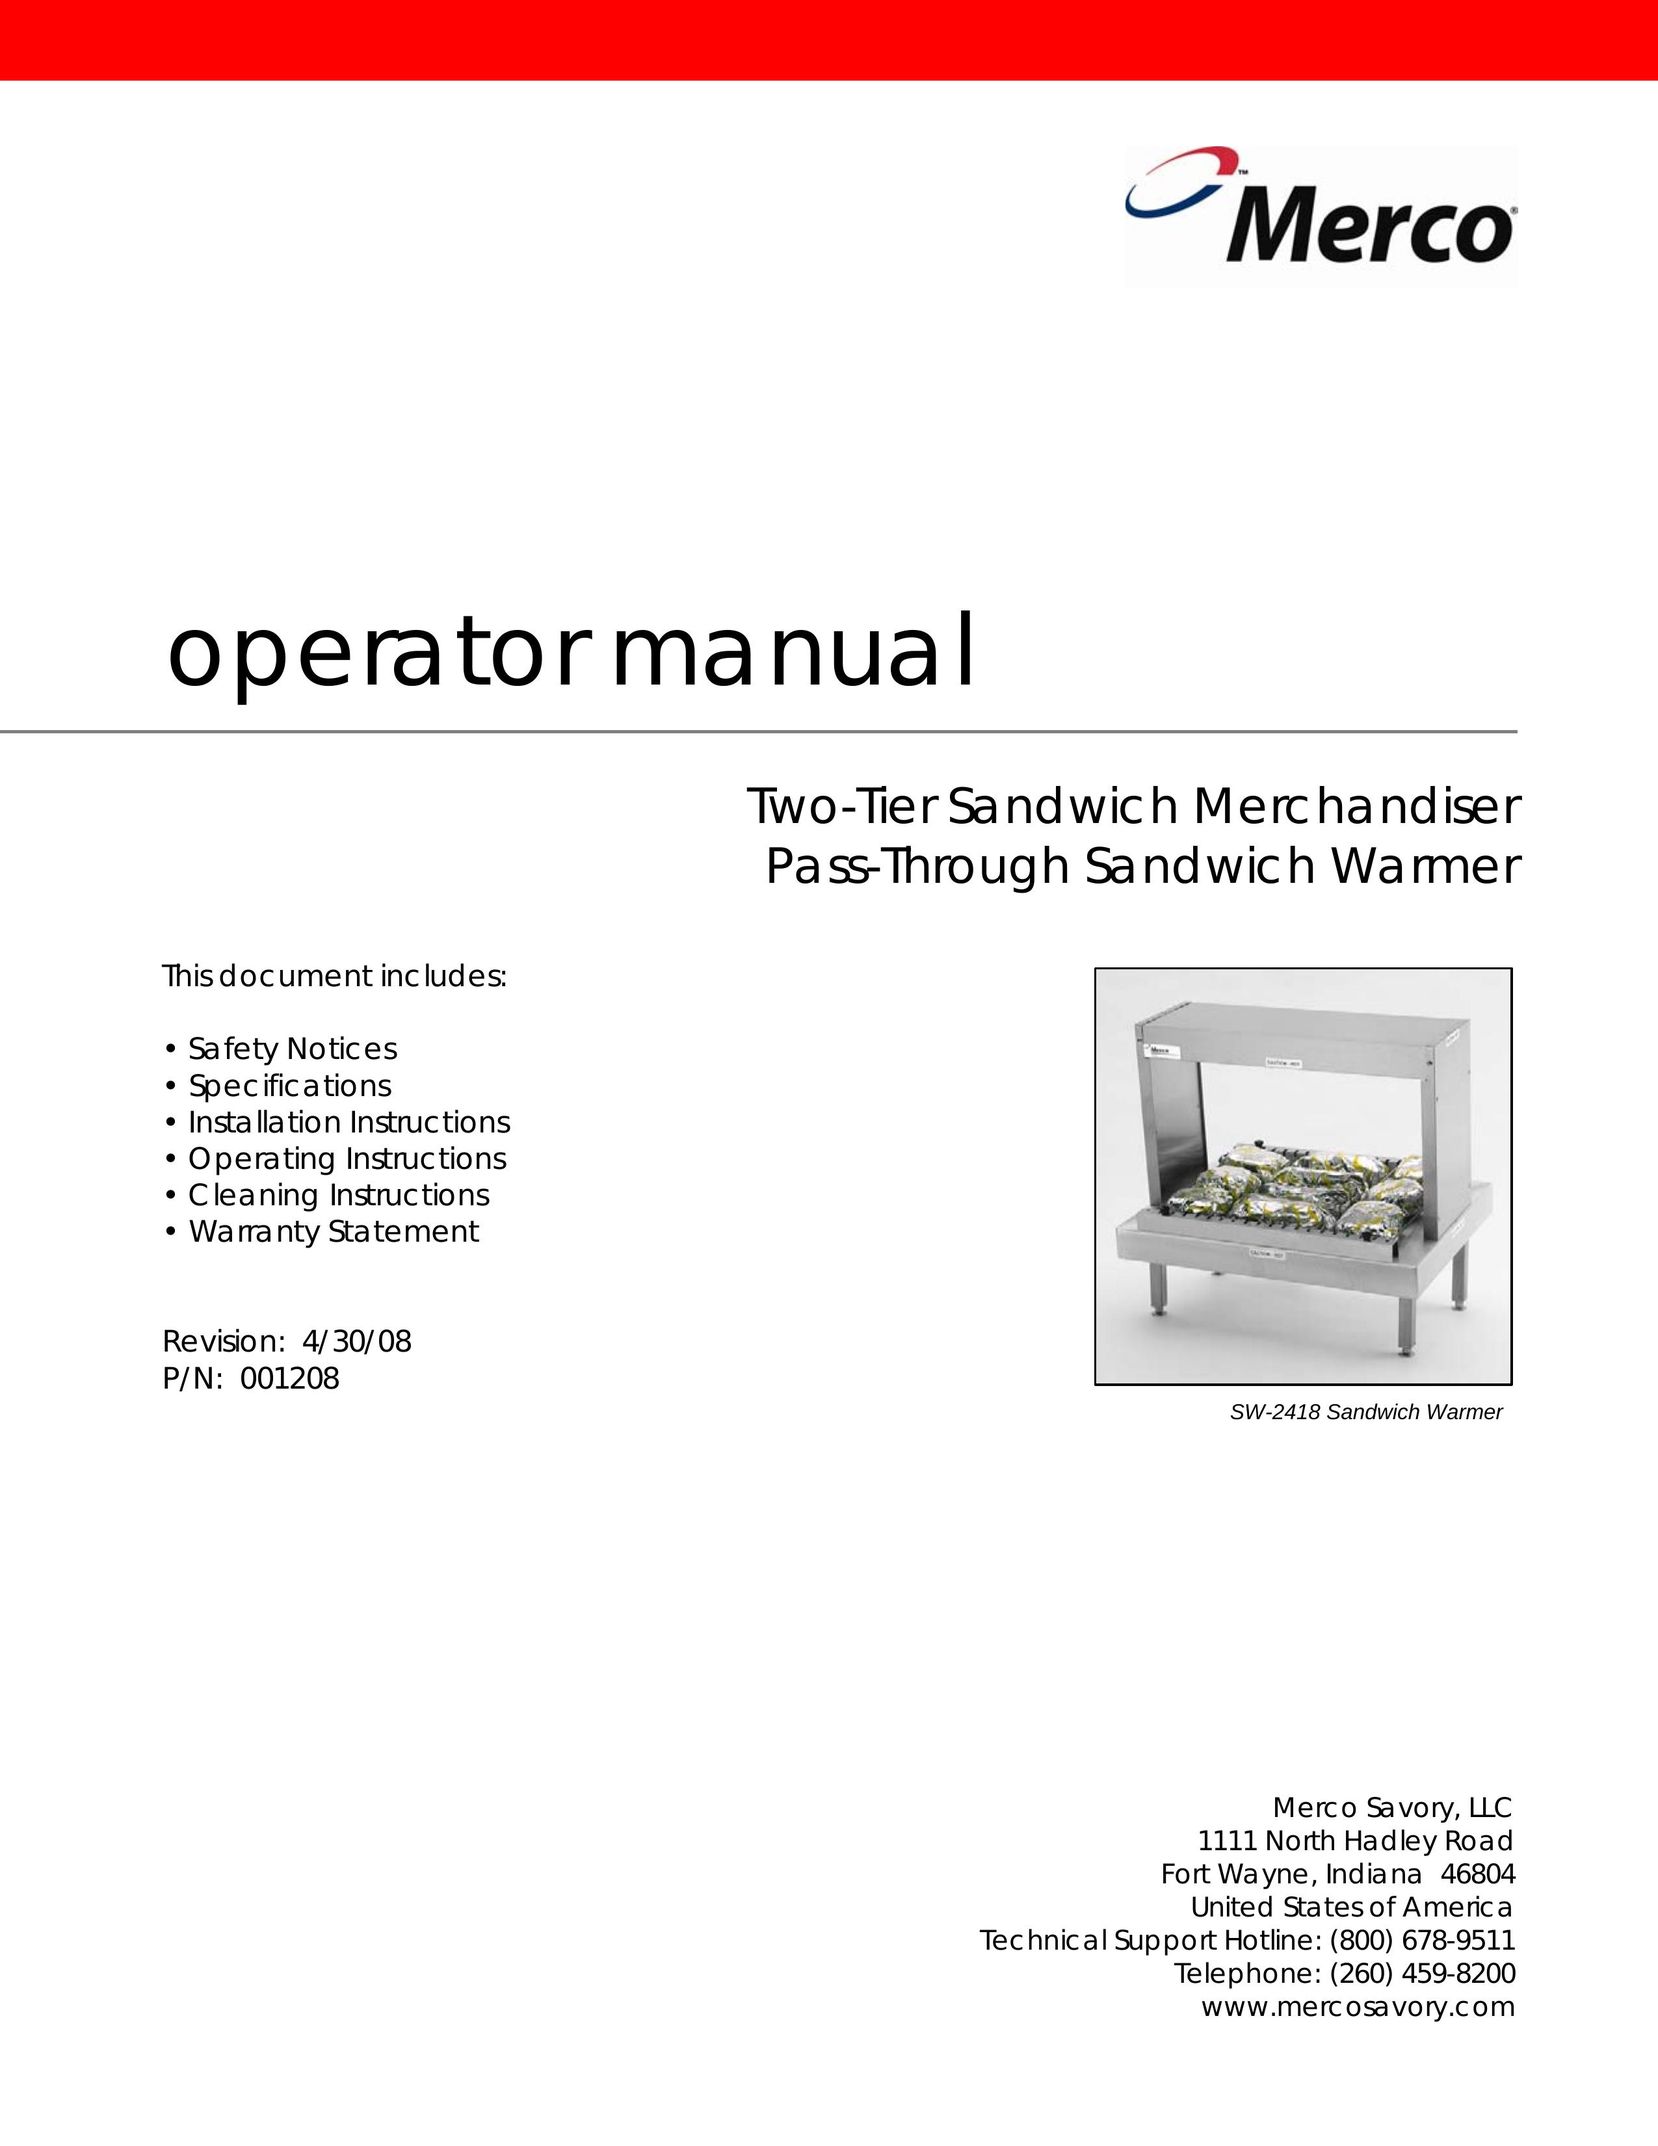 Merco Savory SW-2418 Food Warmer User Manual